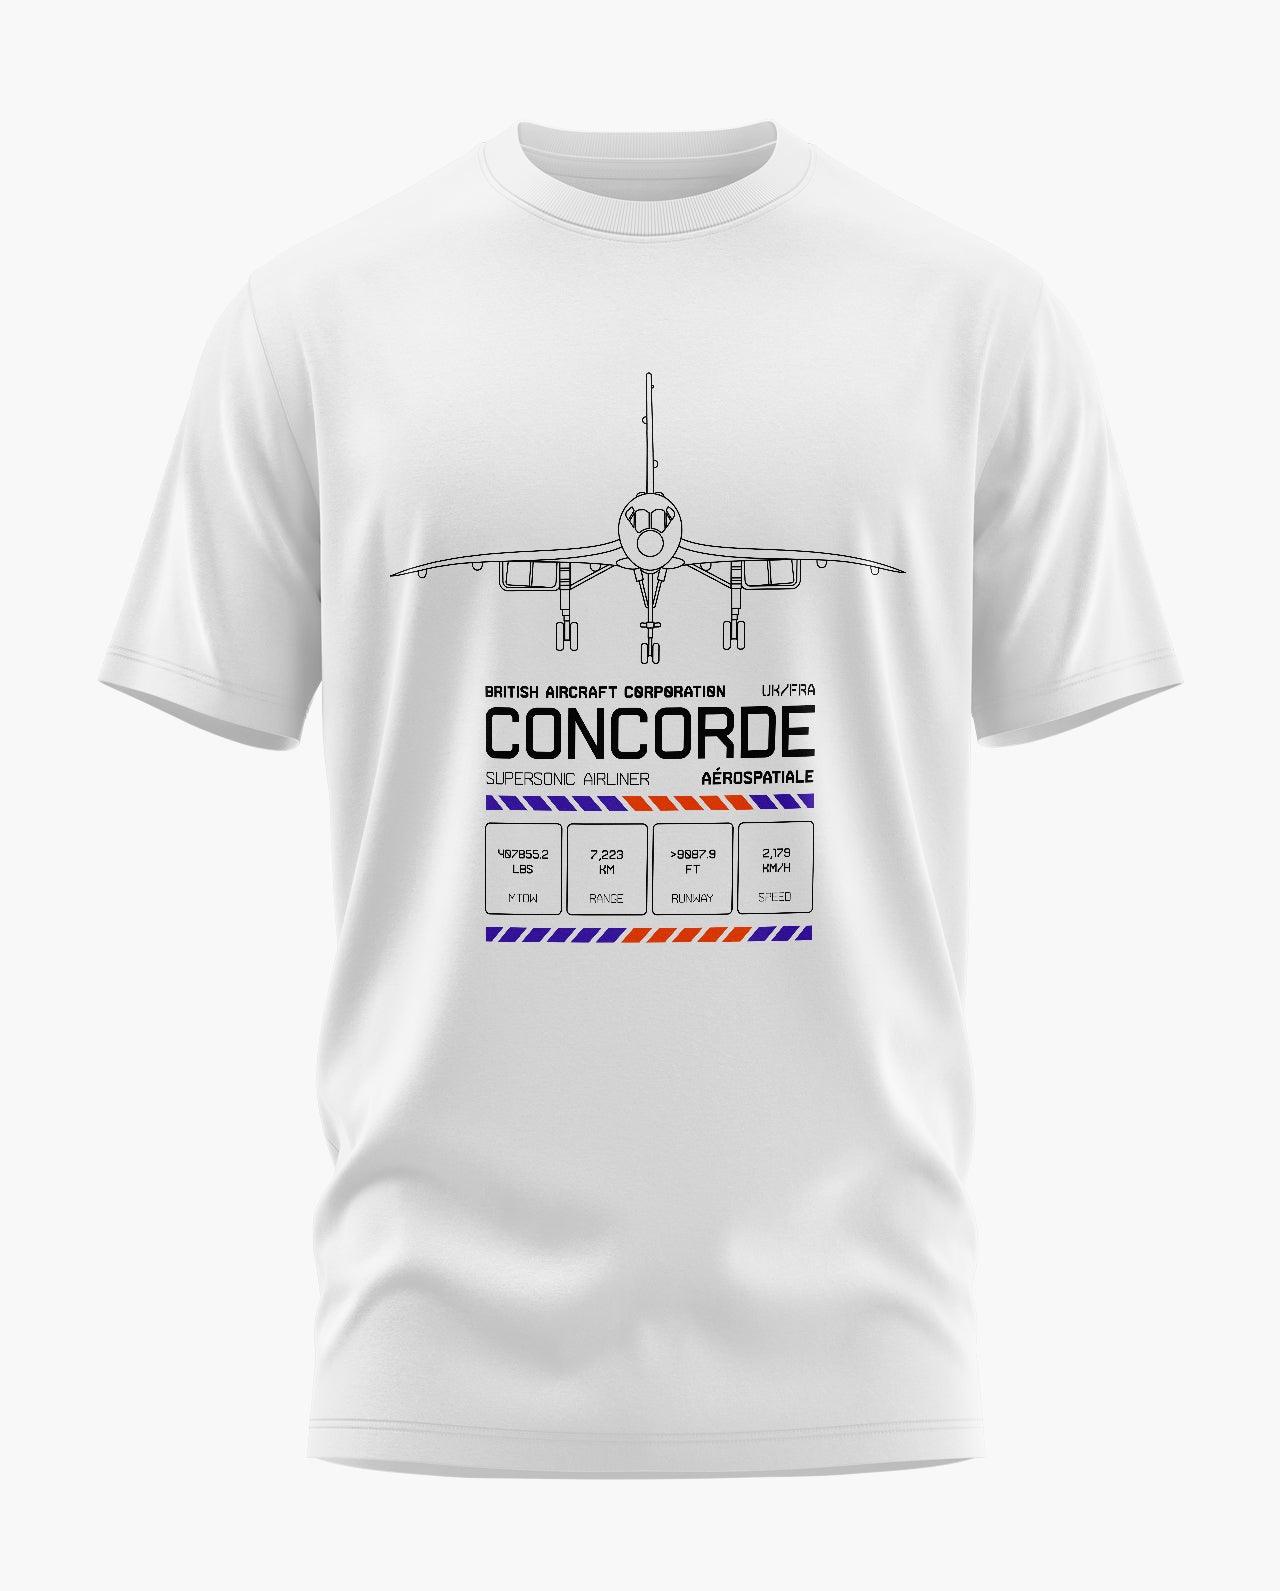 Concorde Blueprint T-Shirt - Aero Armour